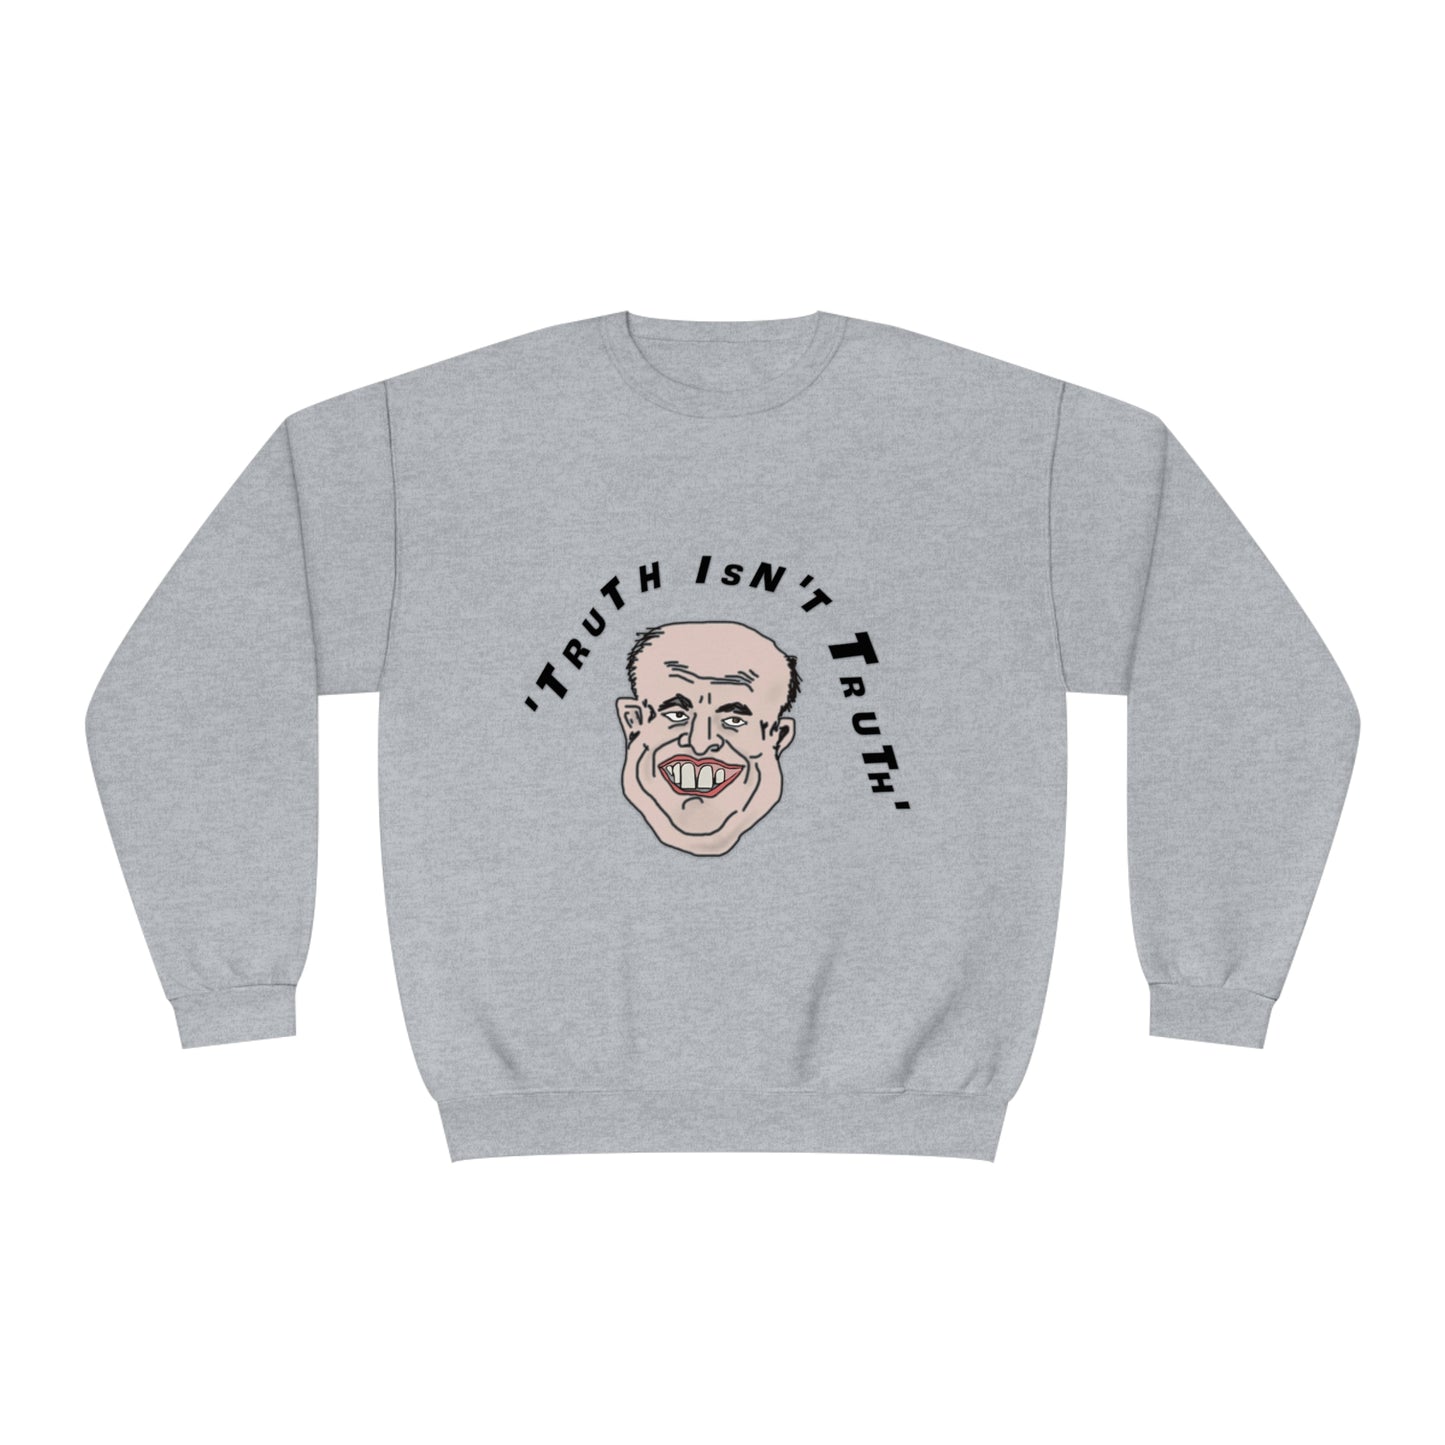 Rudy's Truth Crewneck Sweatshirt